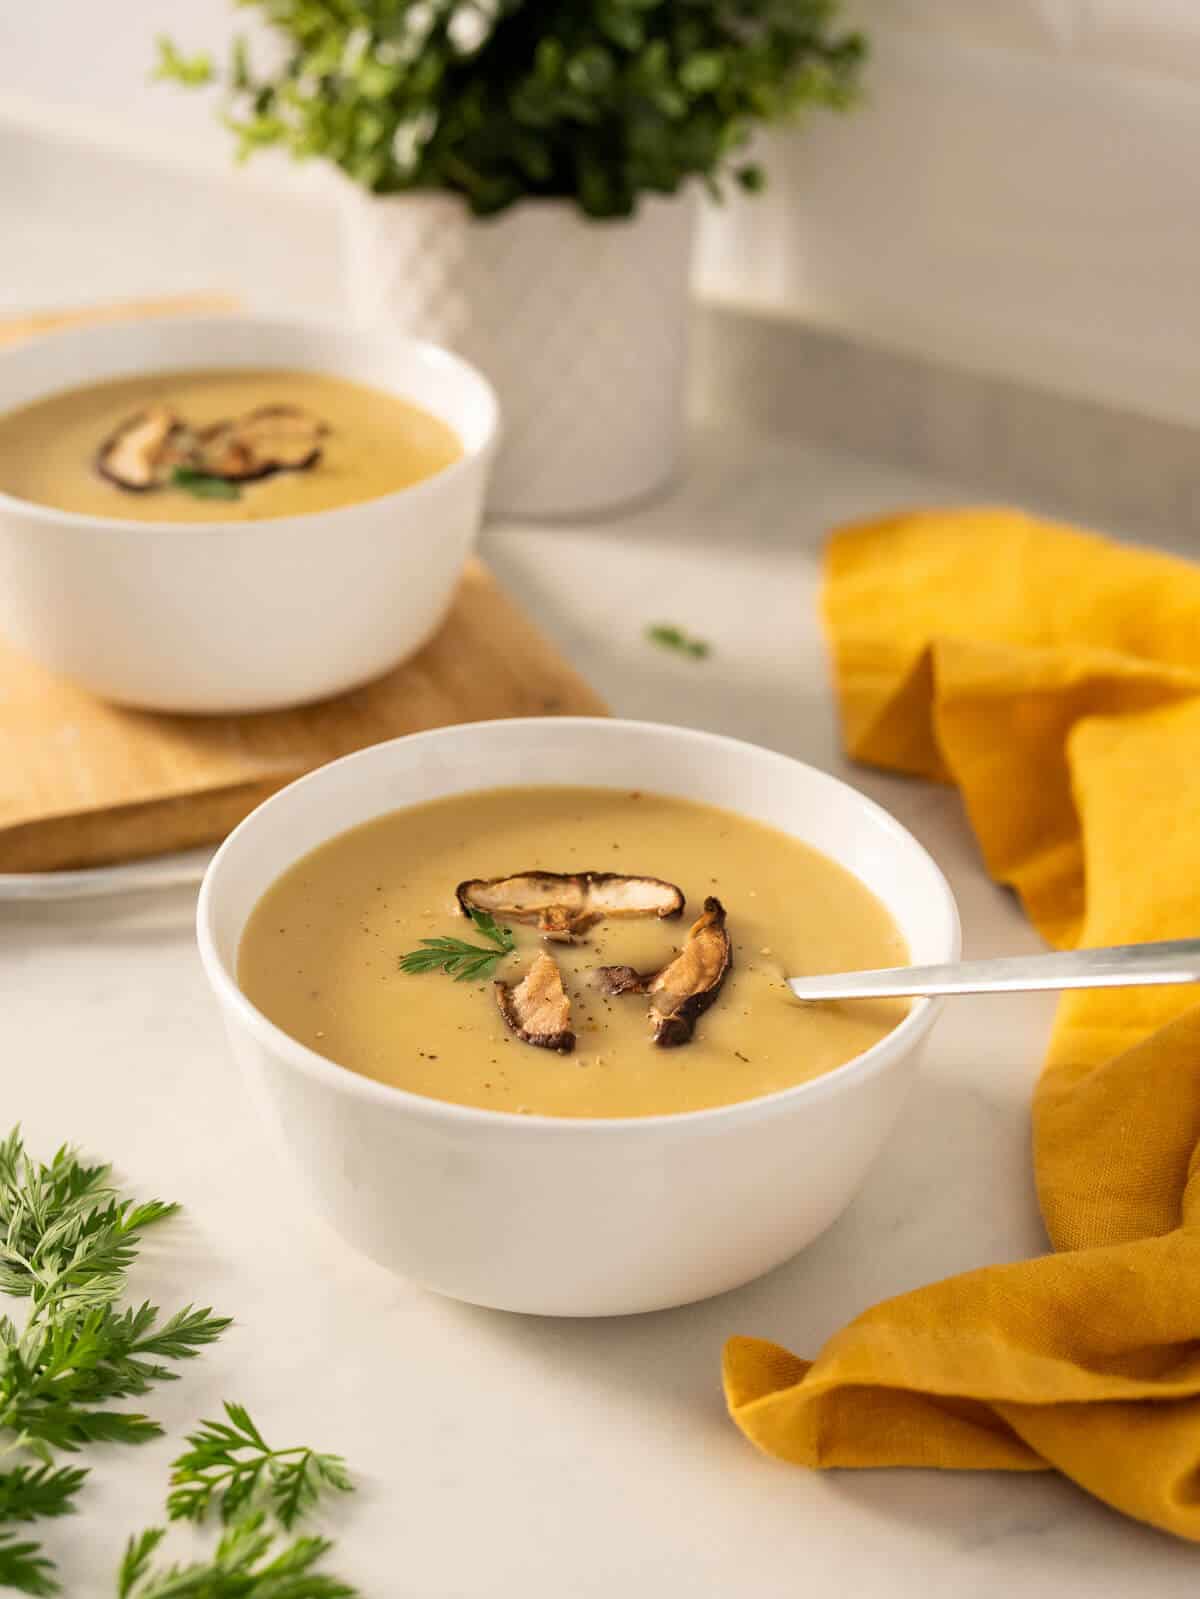 4-ingredient potato soup garnished with sautéd mushrooms.